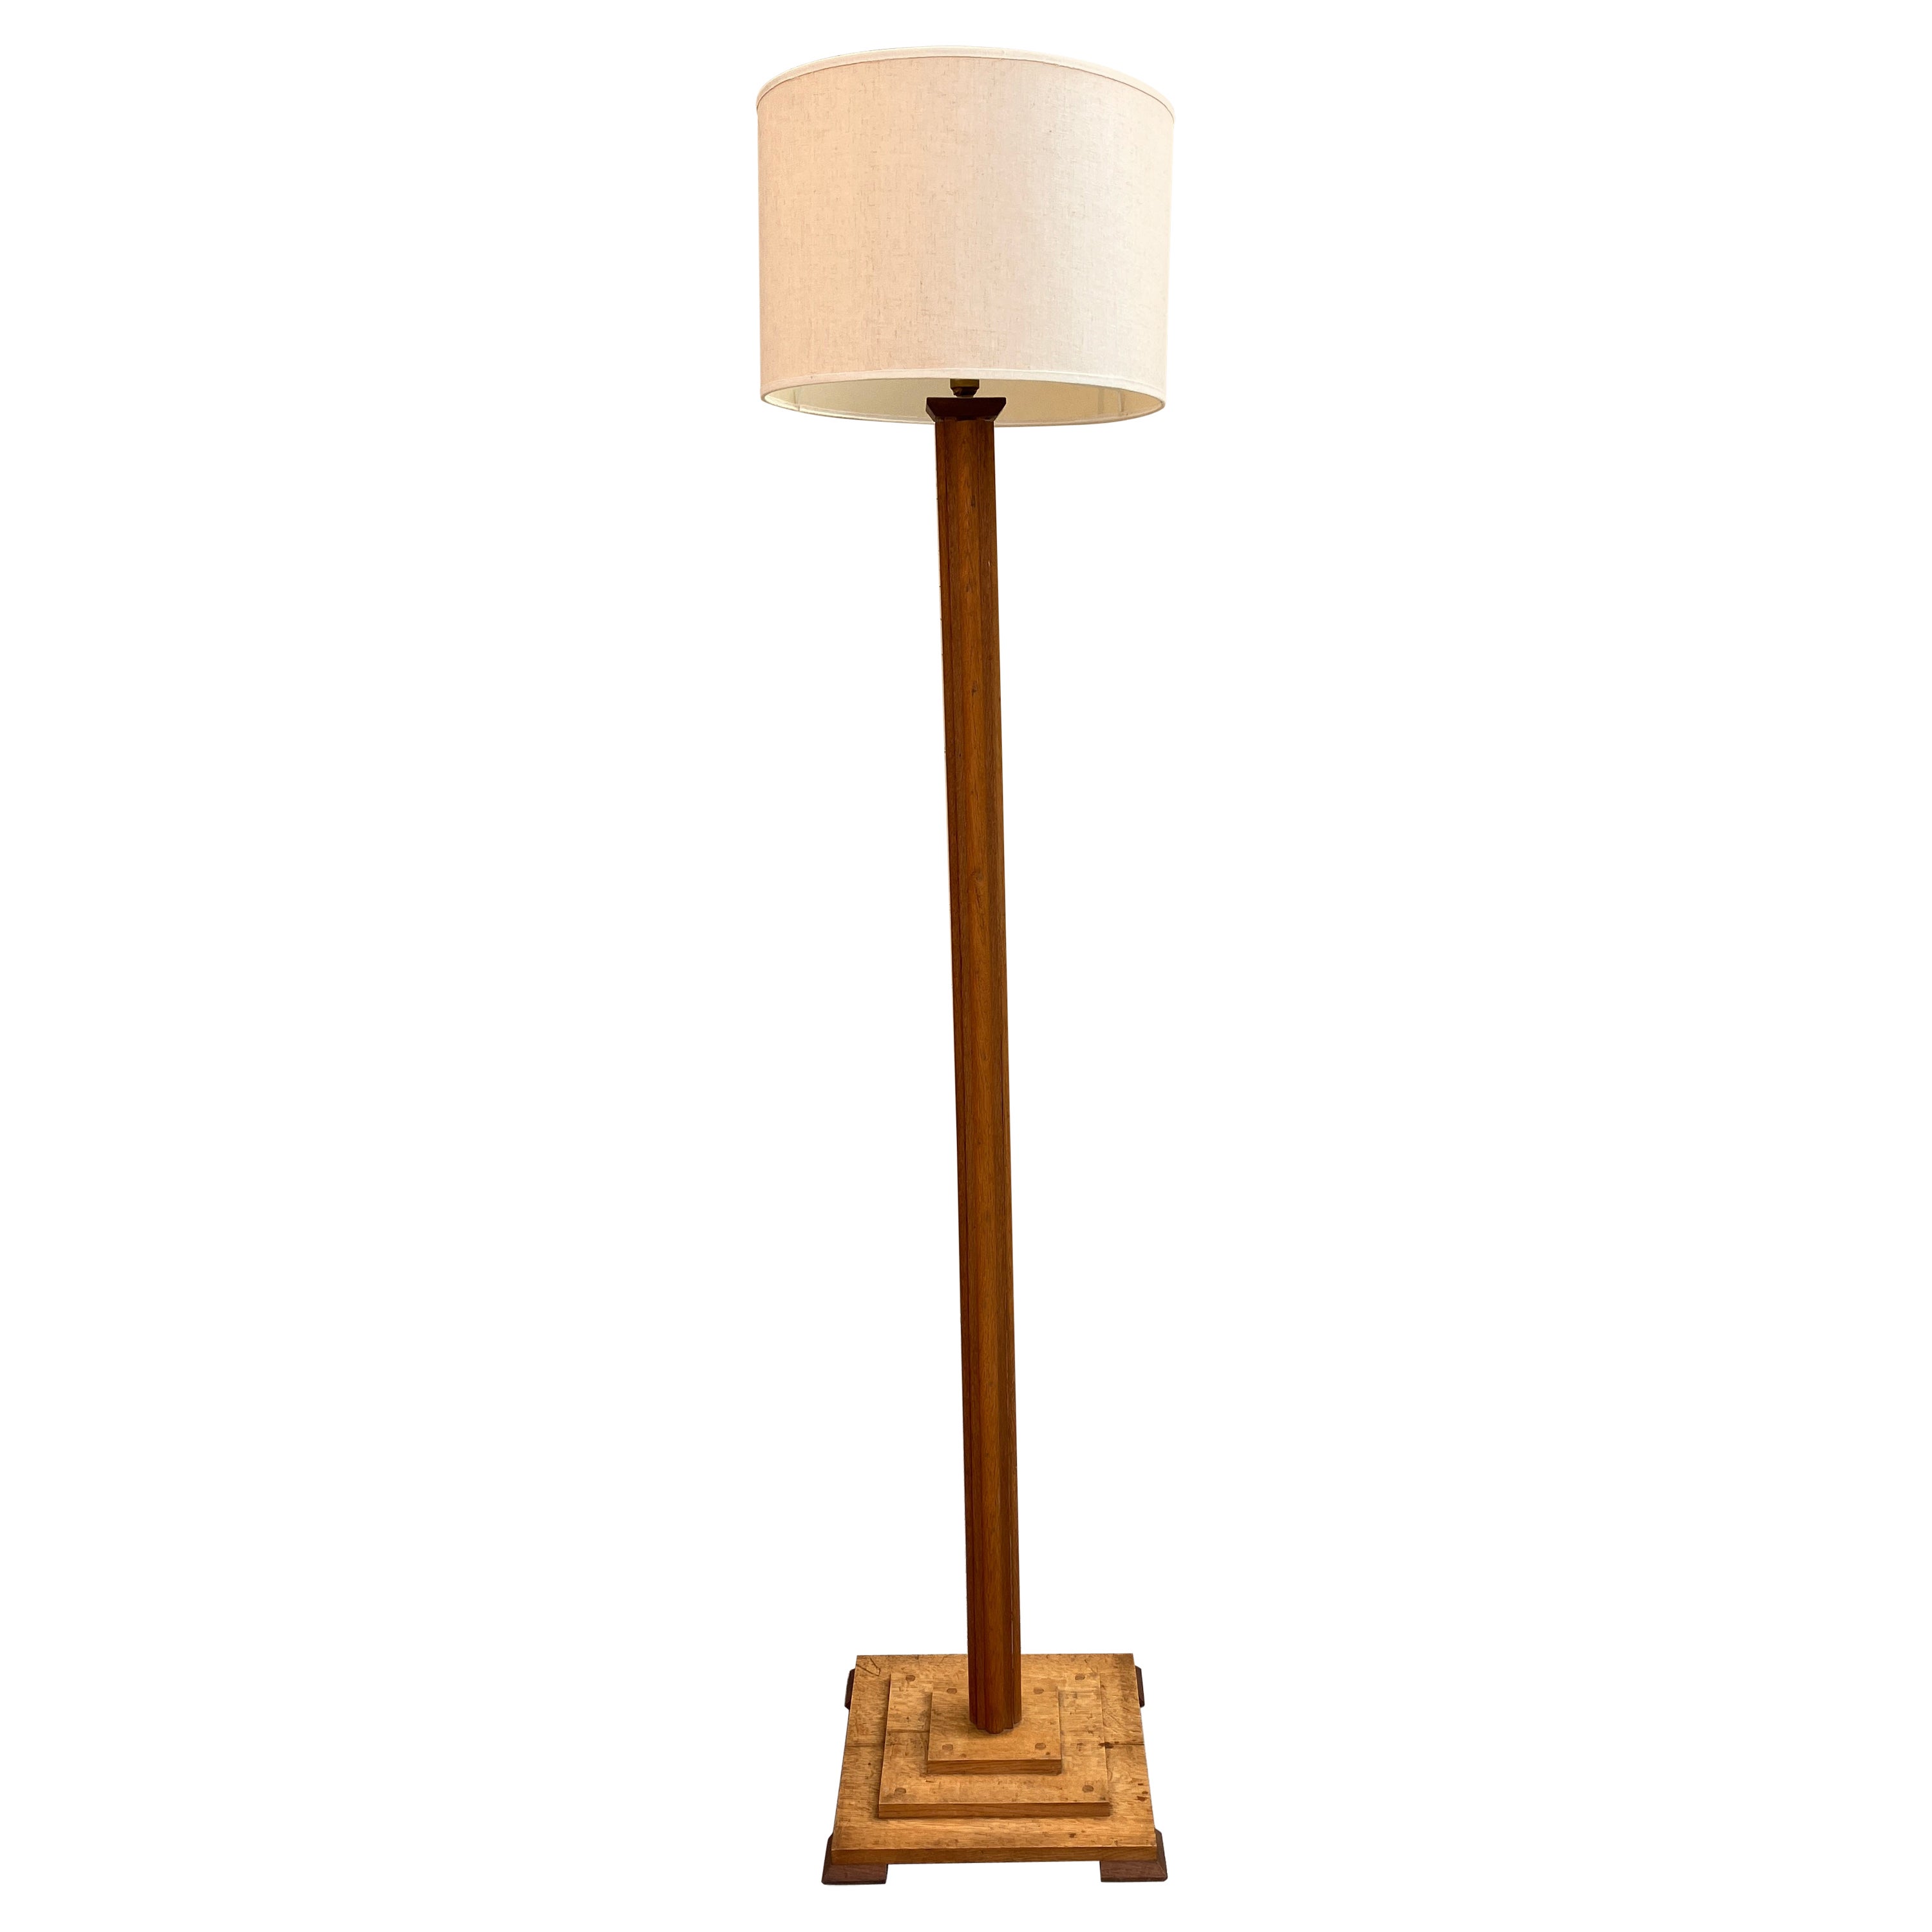 Art Deco pale oak floor lamp  / tall 20's antique standard lamp For Sale